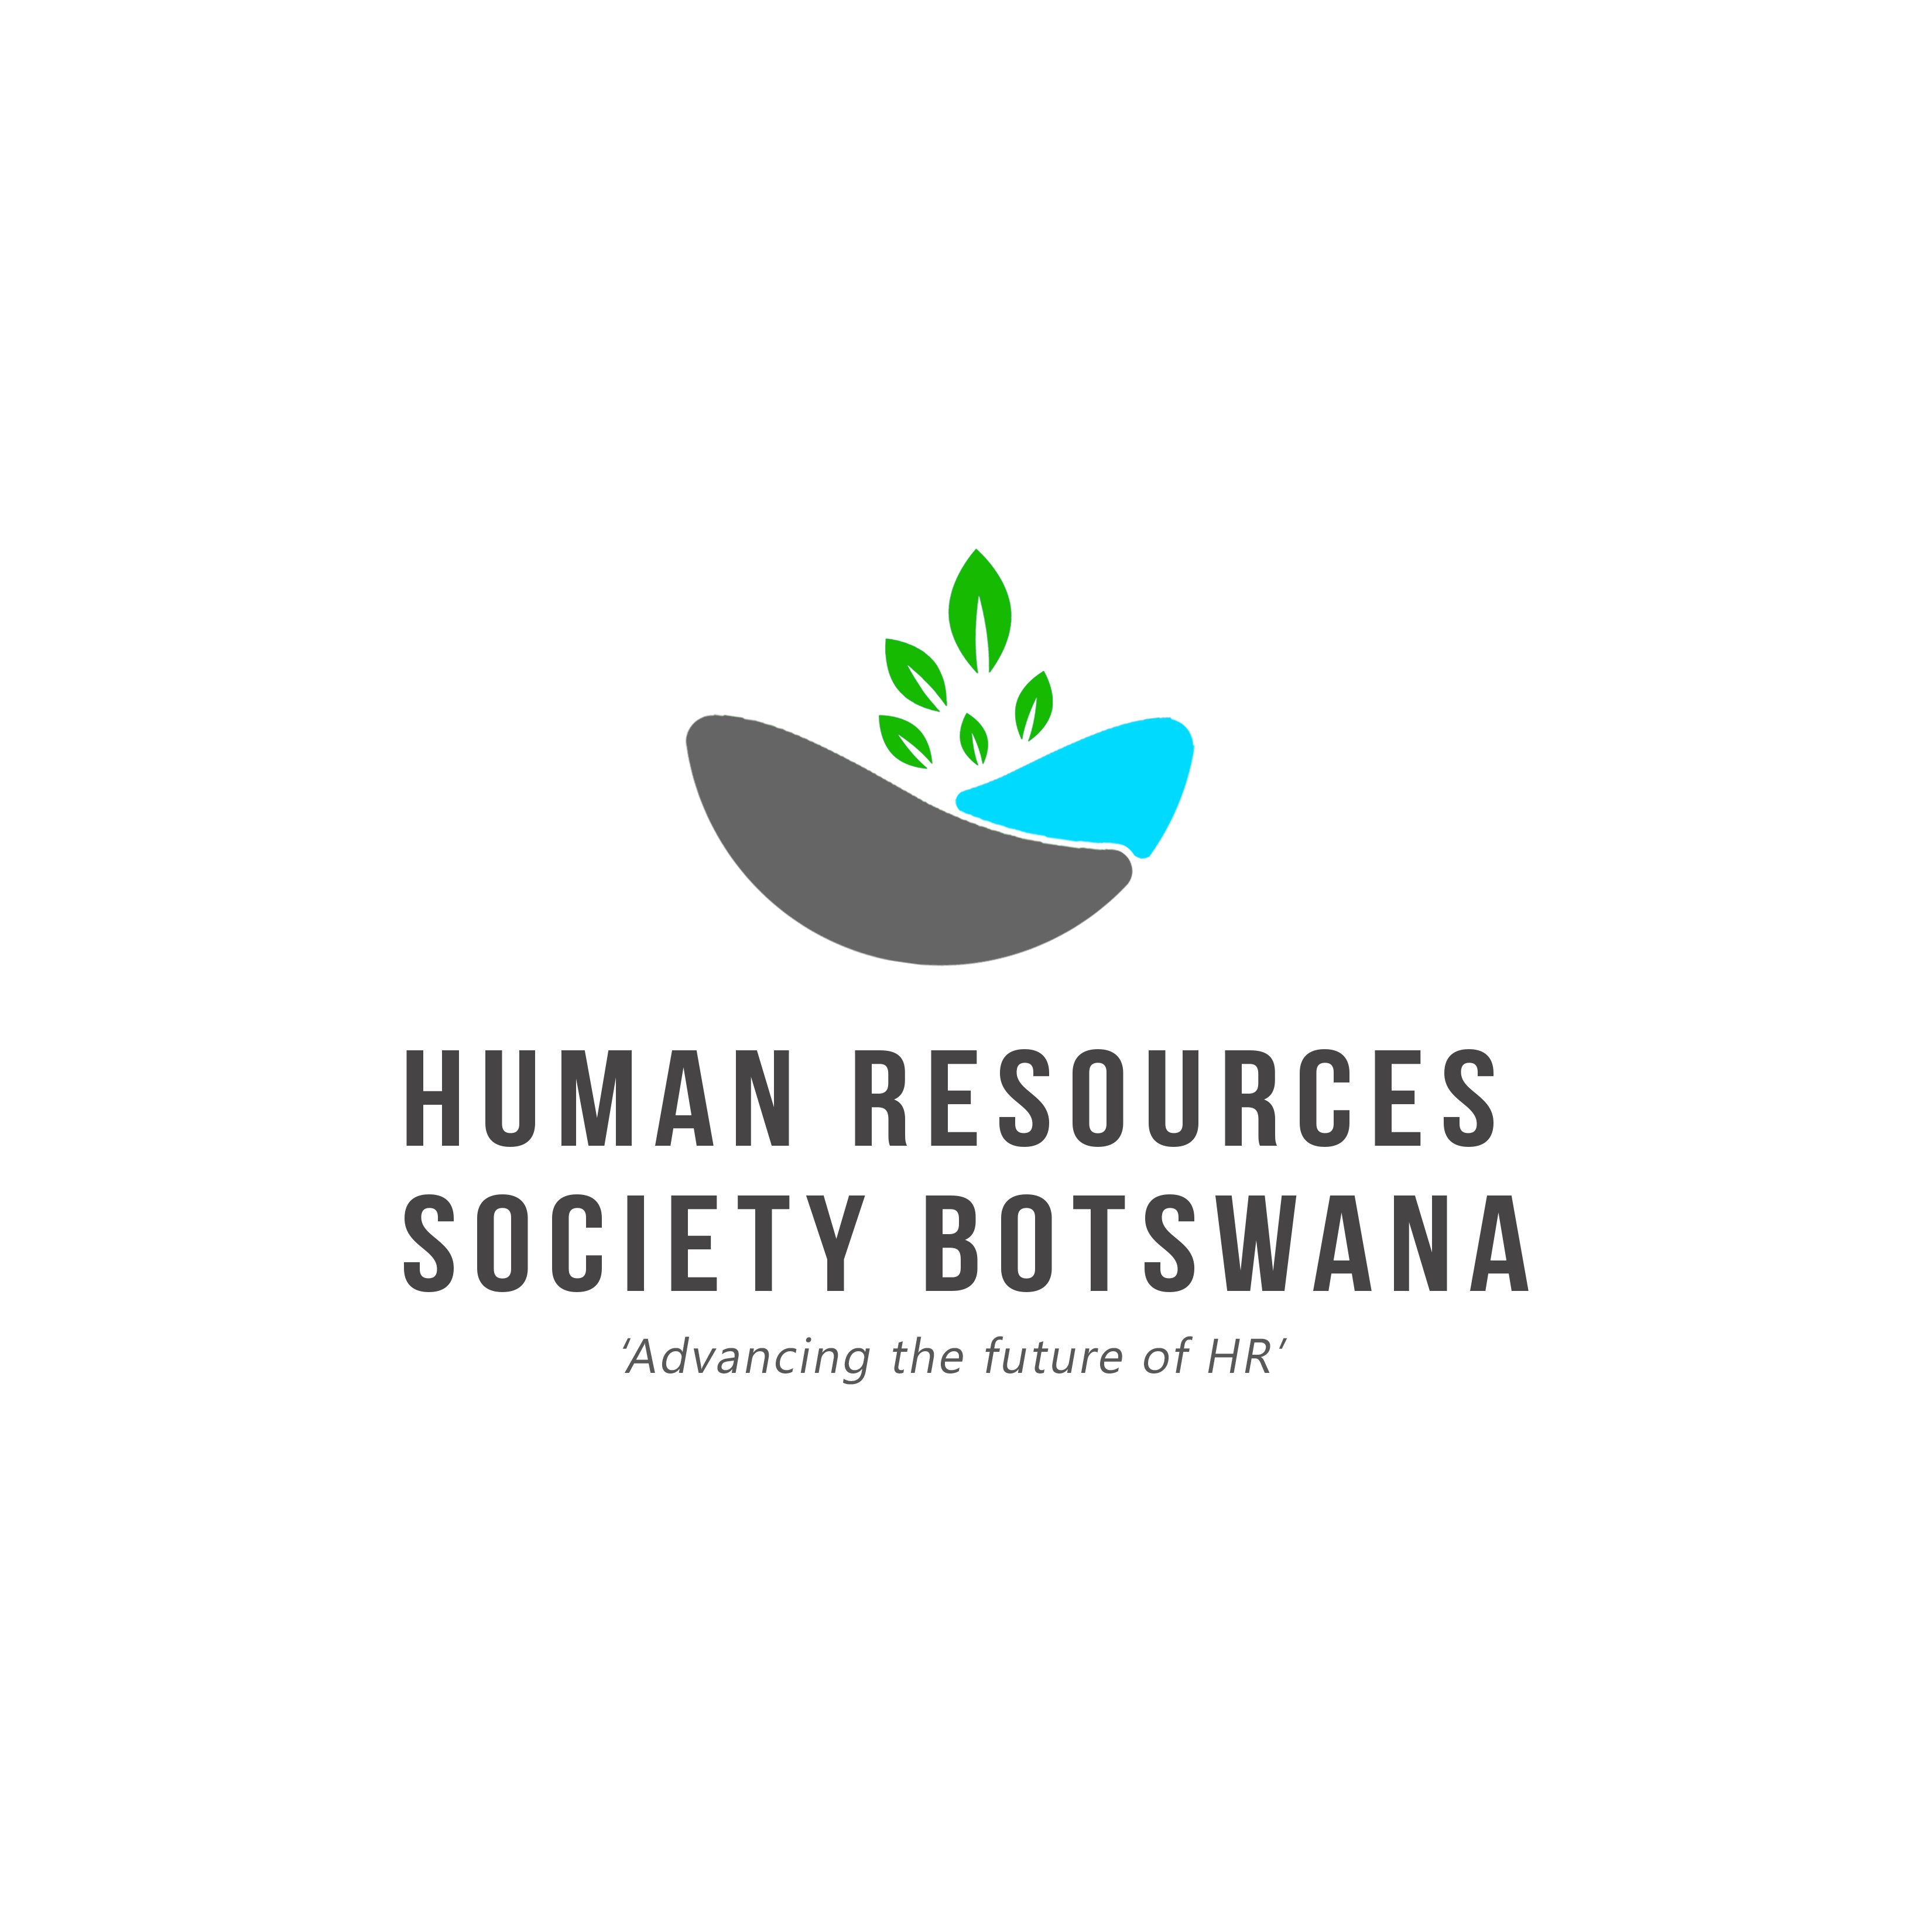 Human Resources Professional's Society Botswana